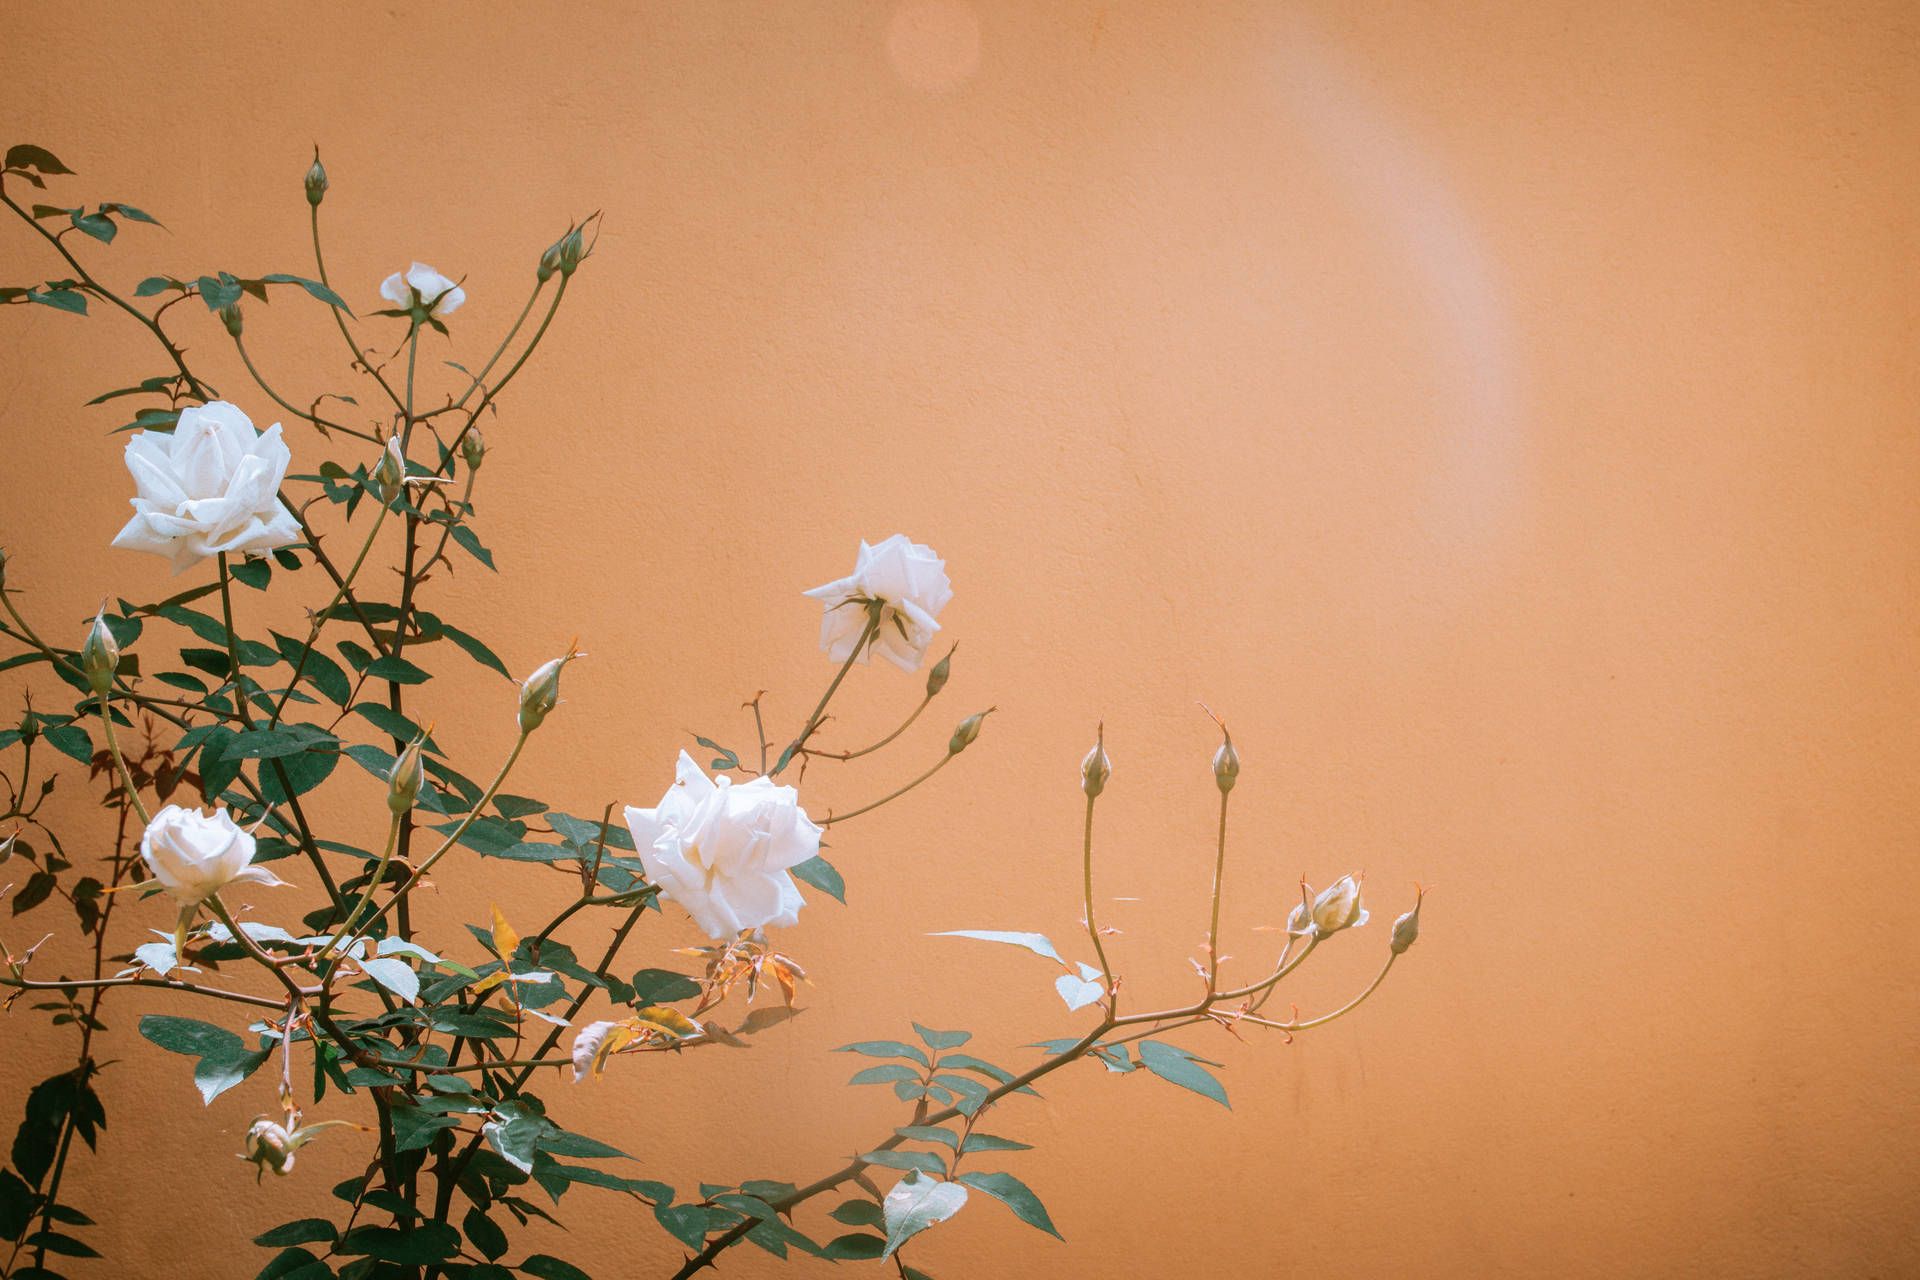 A bush of white roses against a terracotta wall - Dark orange